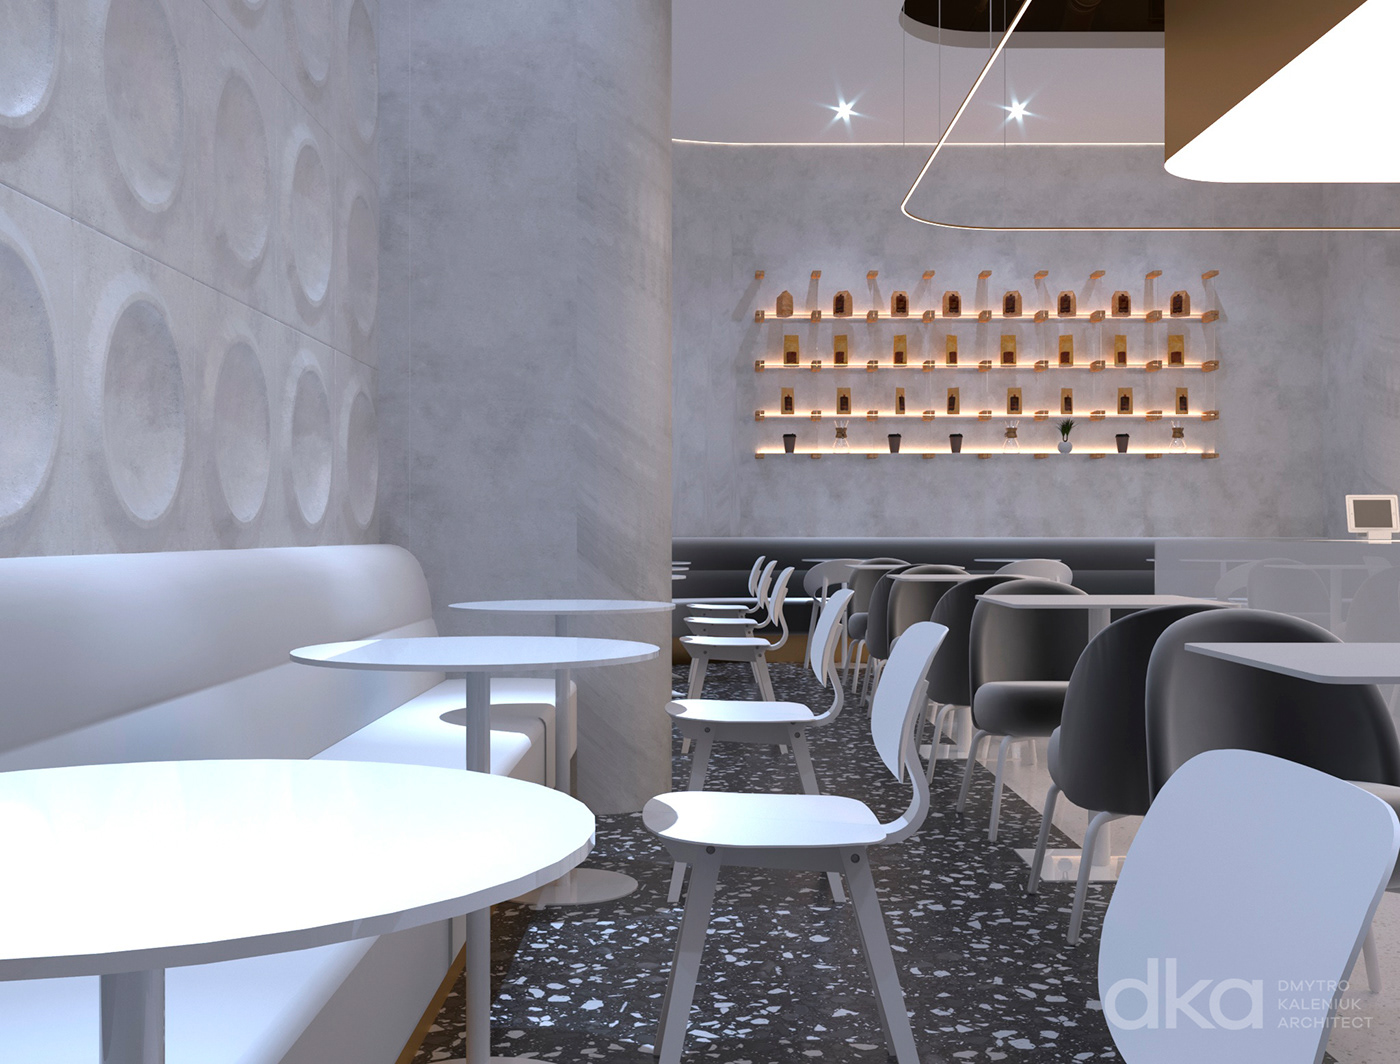 Coffee dubai Project shop architecture interior design  modern visualization archviz restaurant